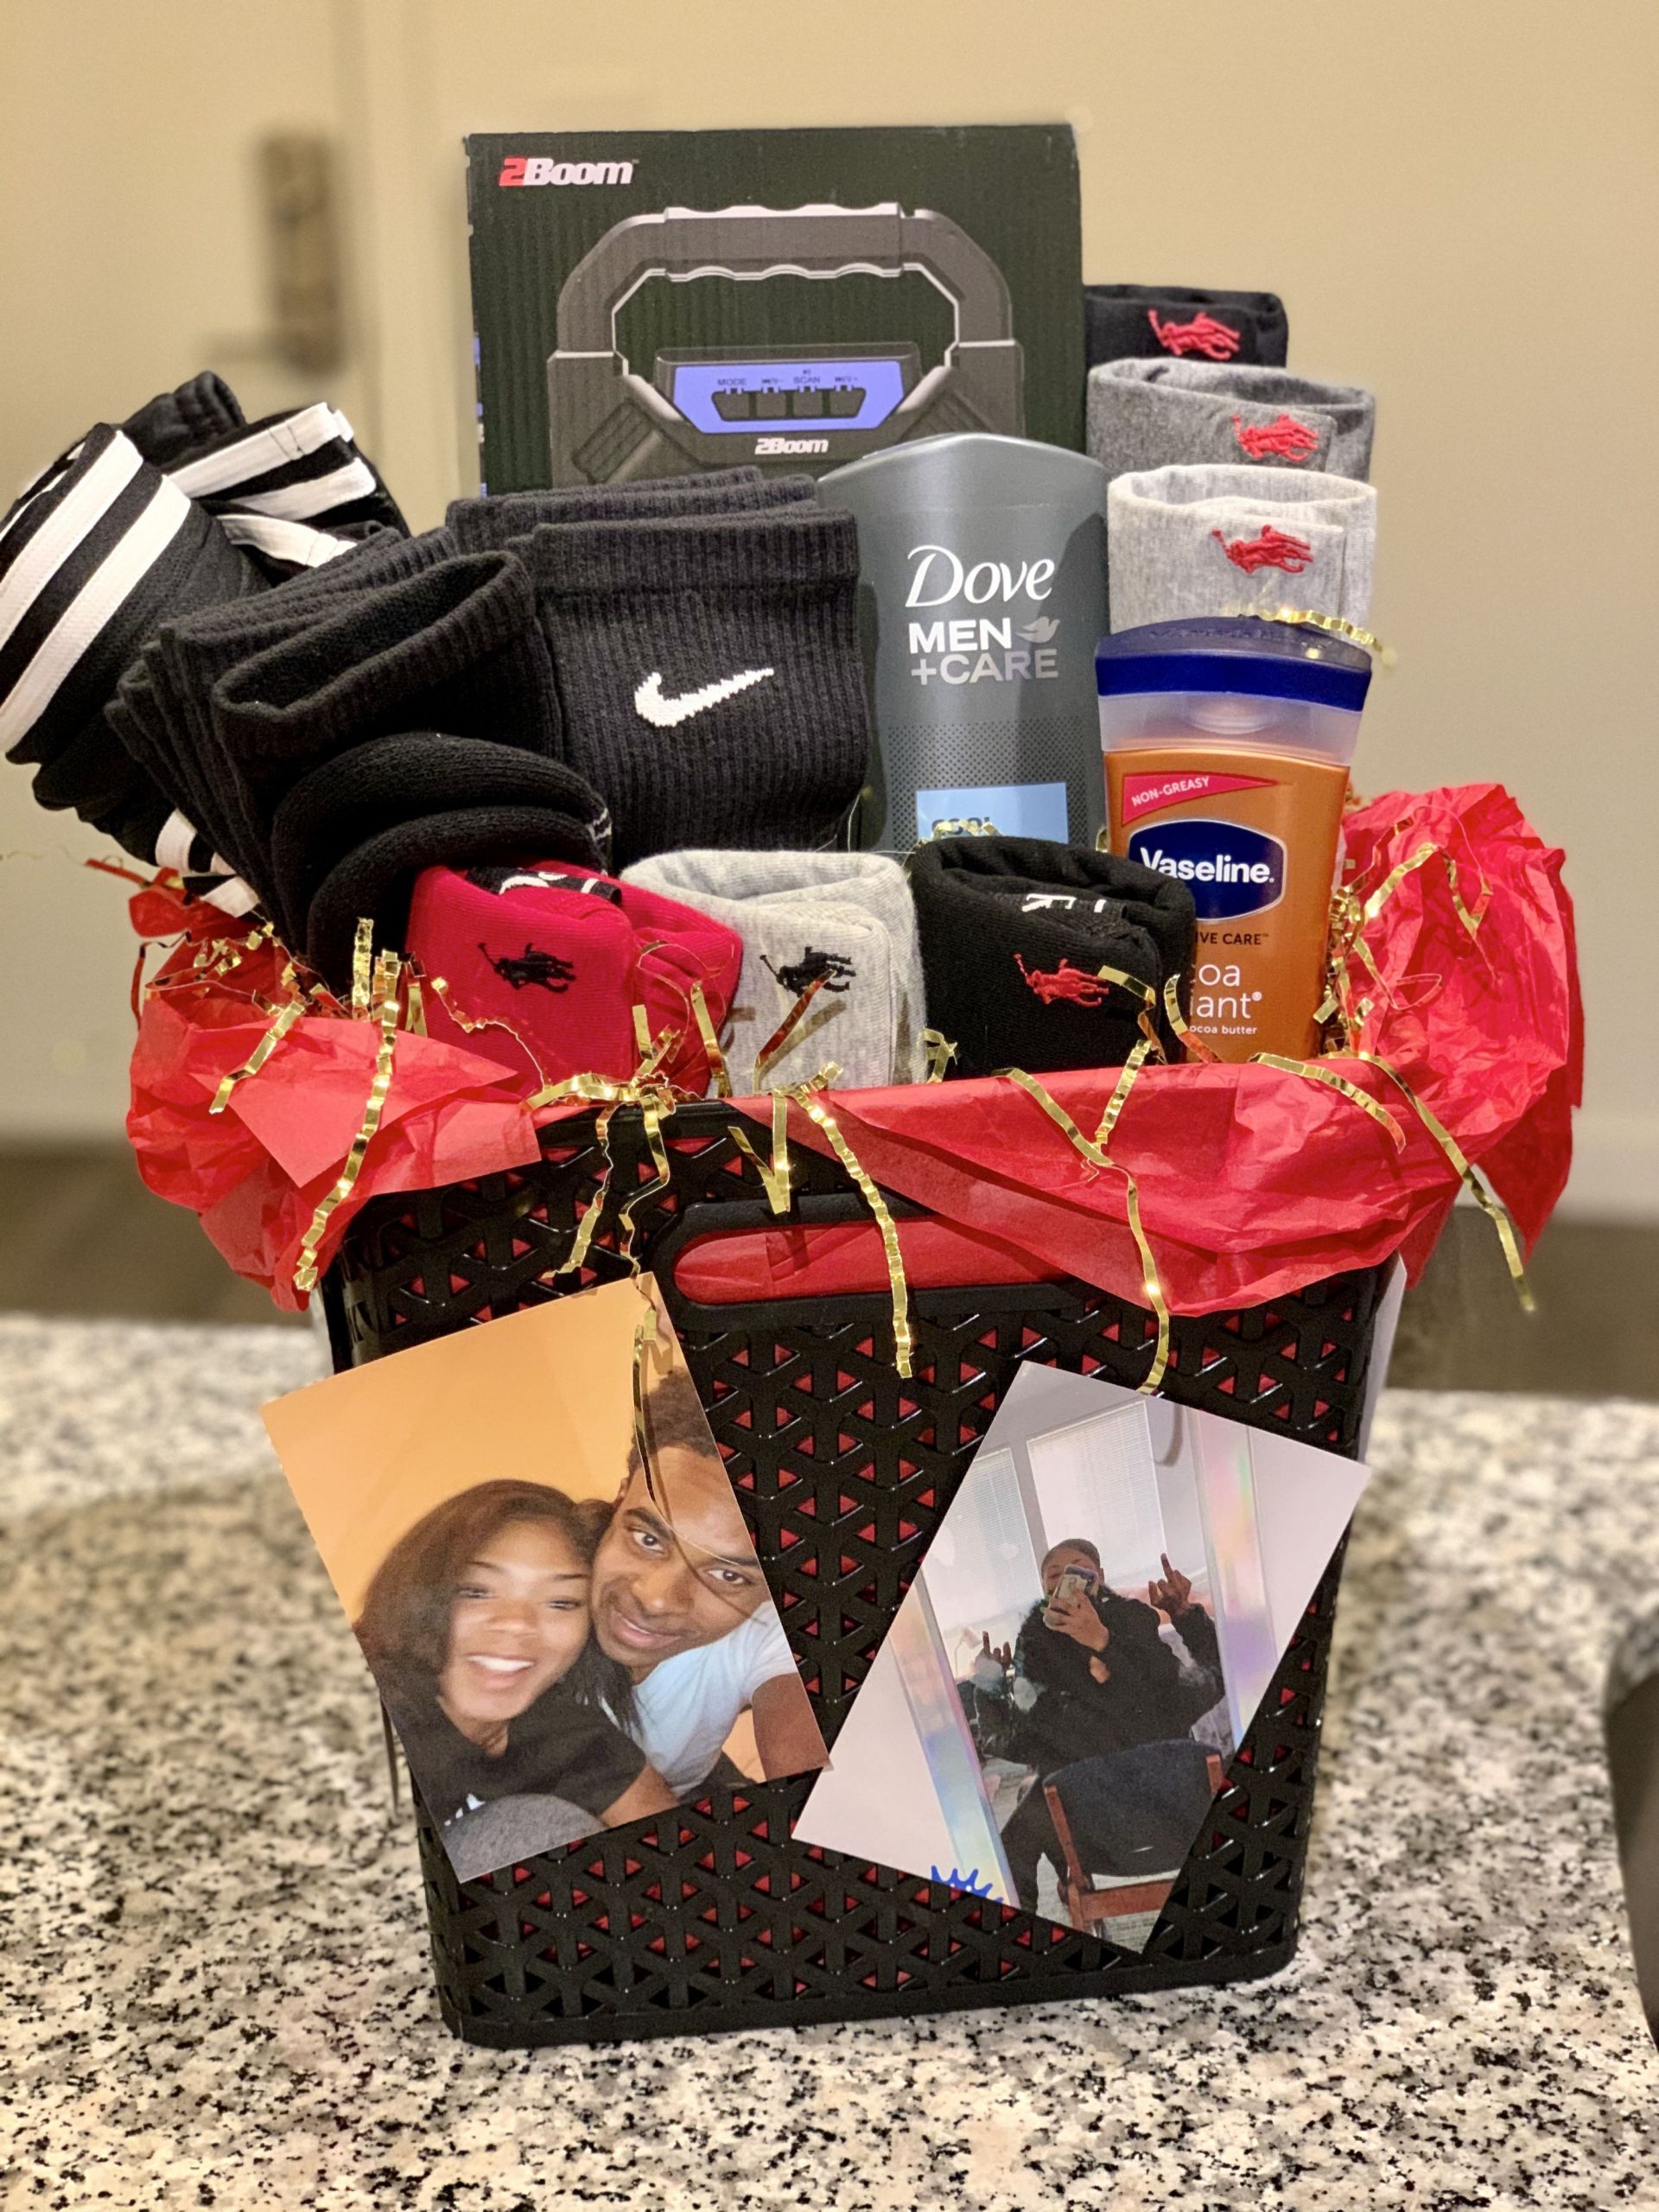 Cool Gift Ideas For Boyfriend
 The Boyfriend box